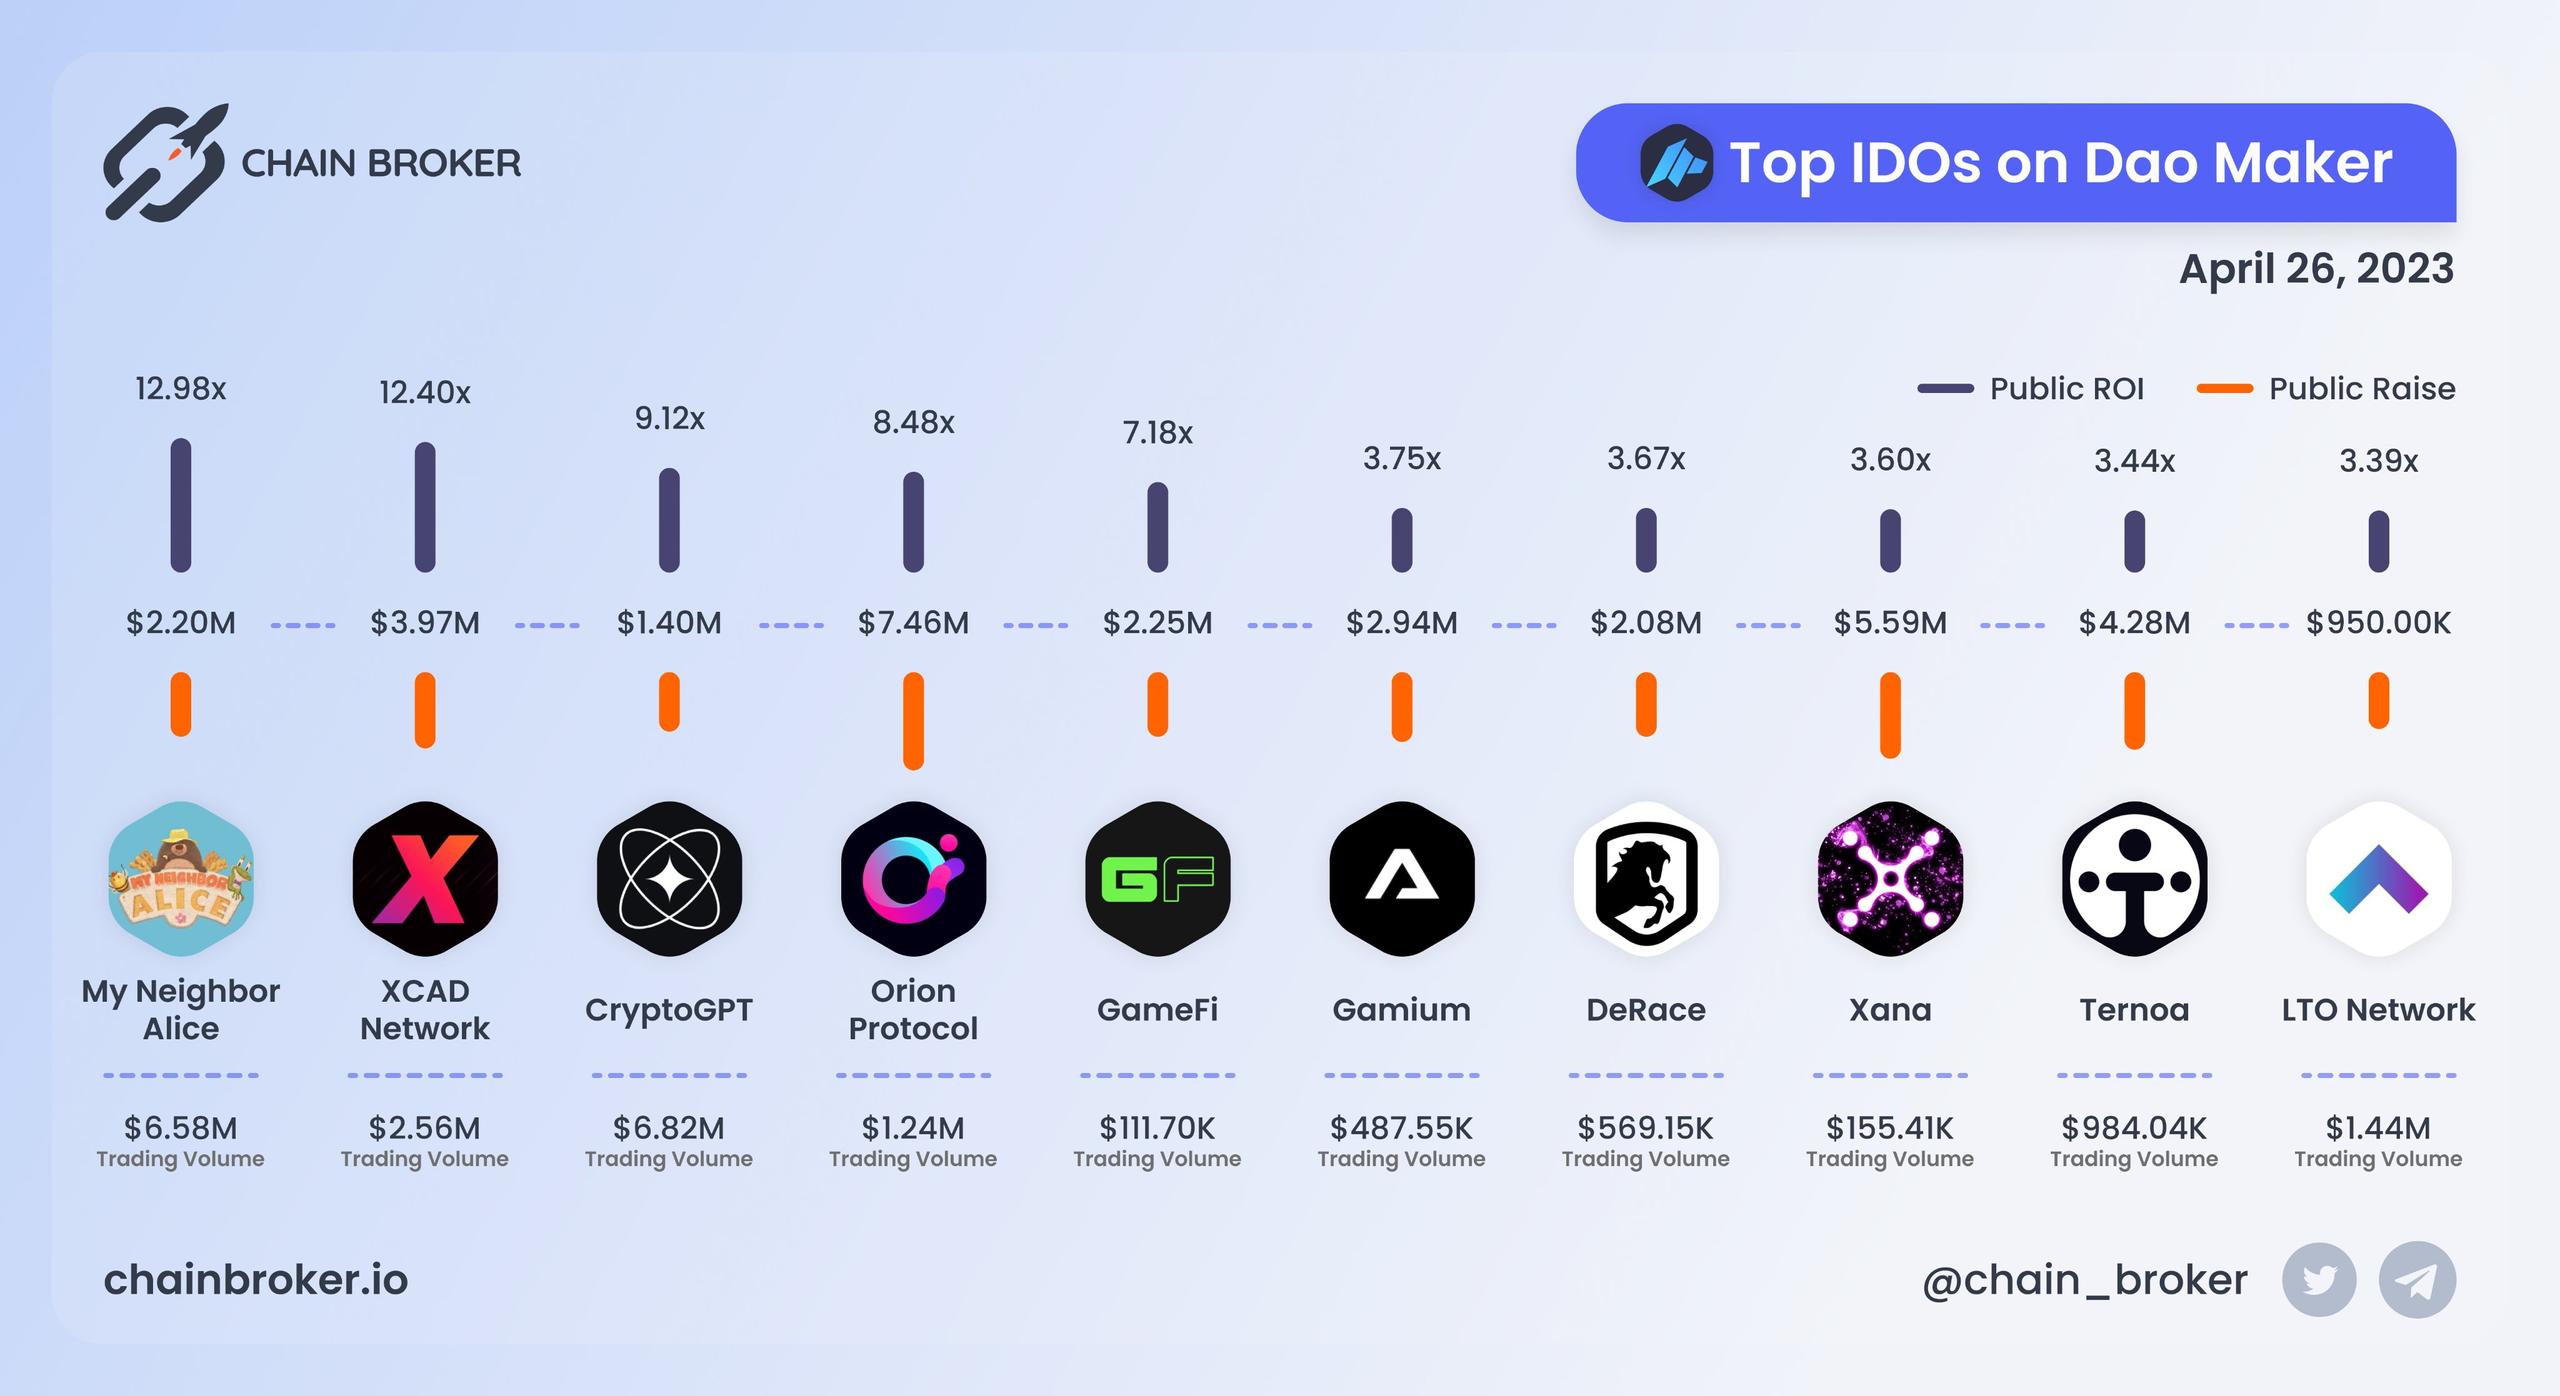 Top IDOs on Dao Maker